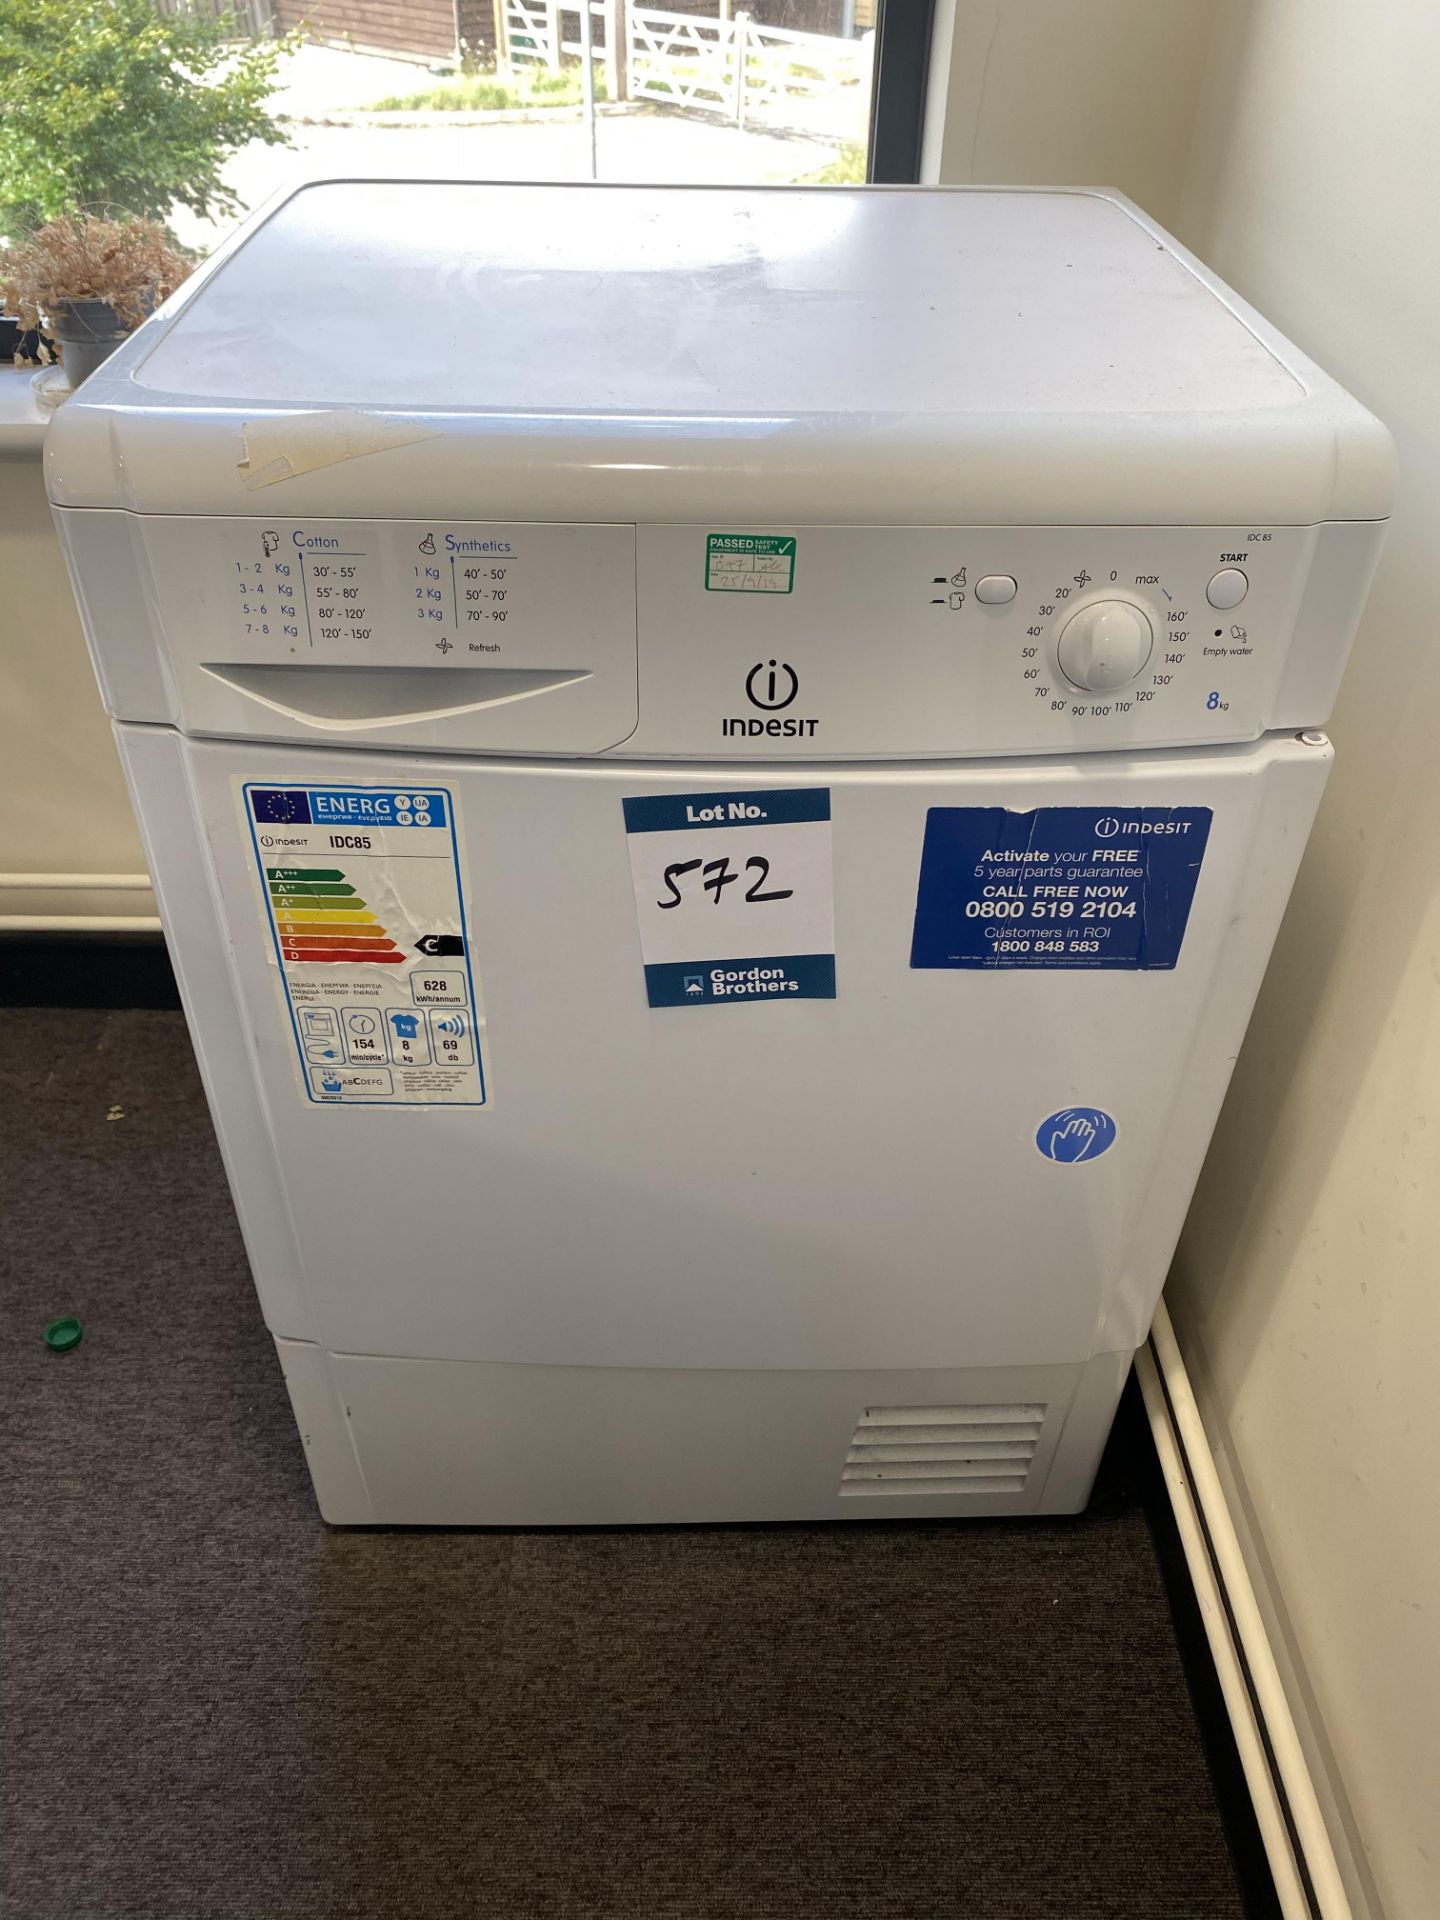 Indesit 1WDC6125 washing machine, Beko ARTIO dishwasher, Indesit A+ Class fridge/freezer, Bosch